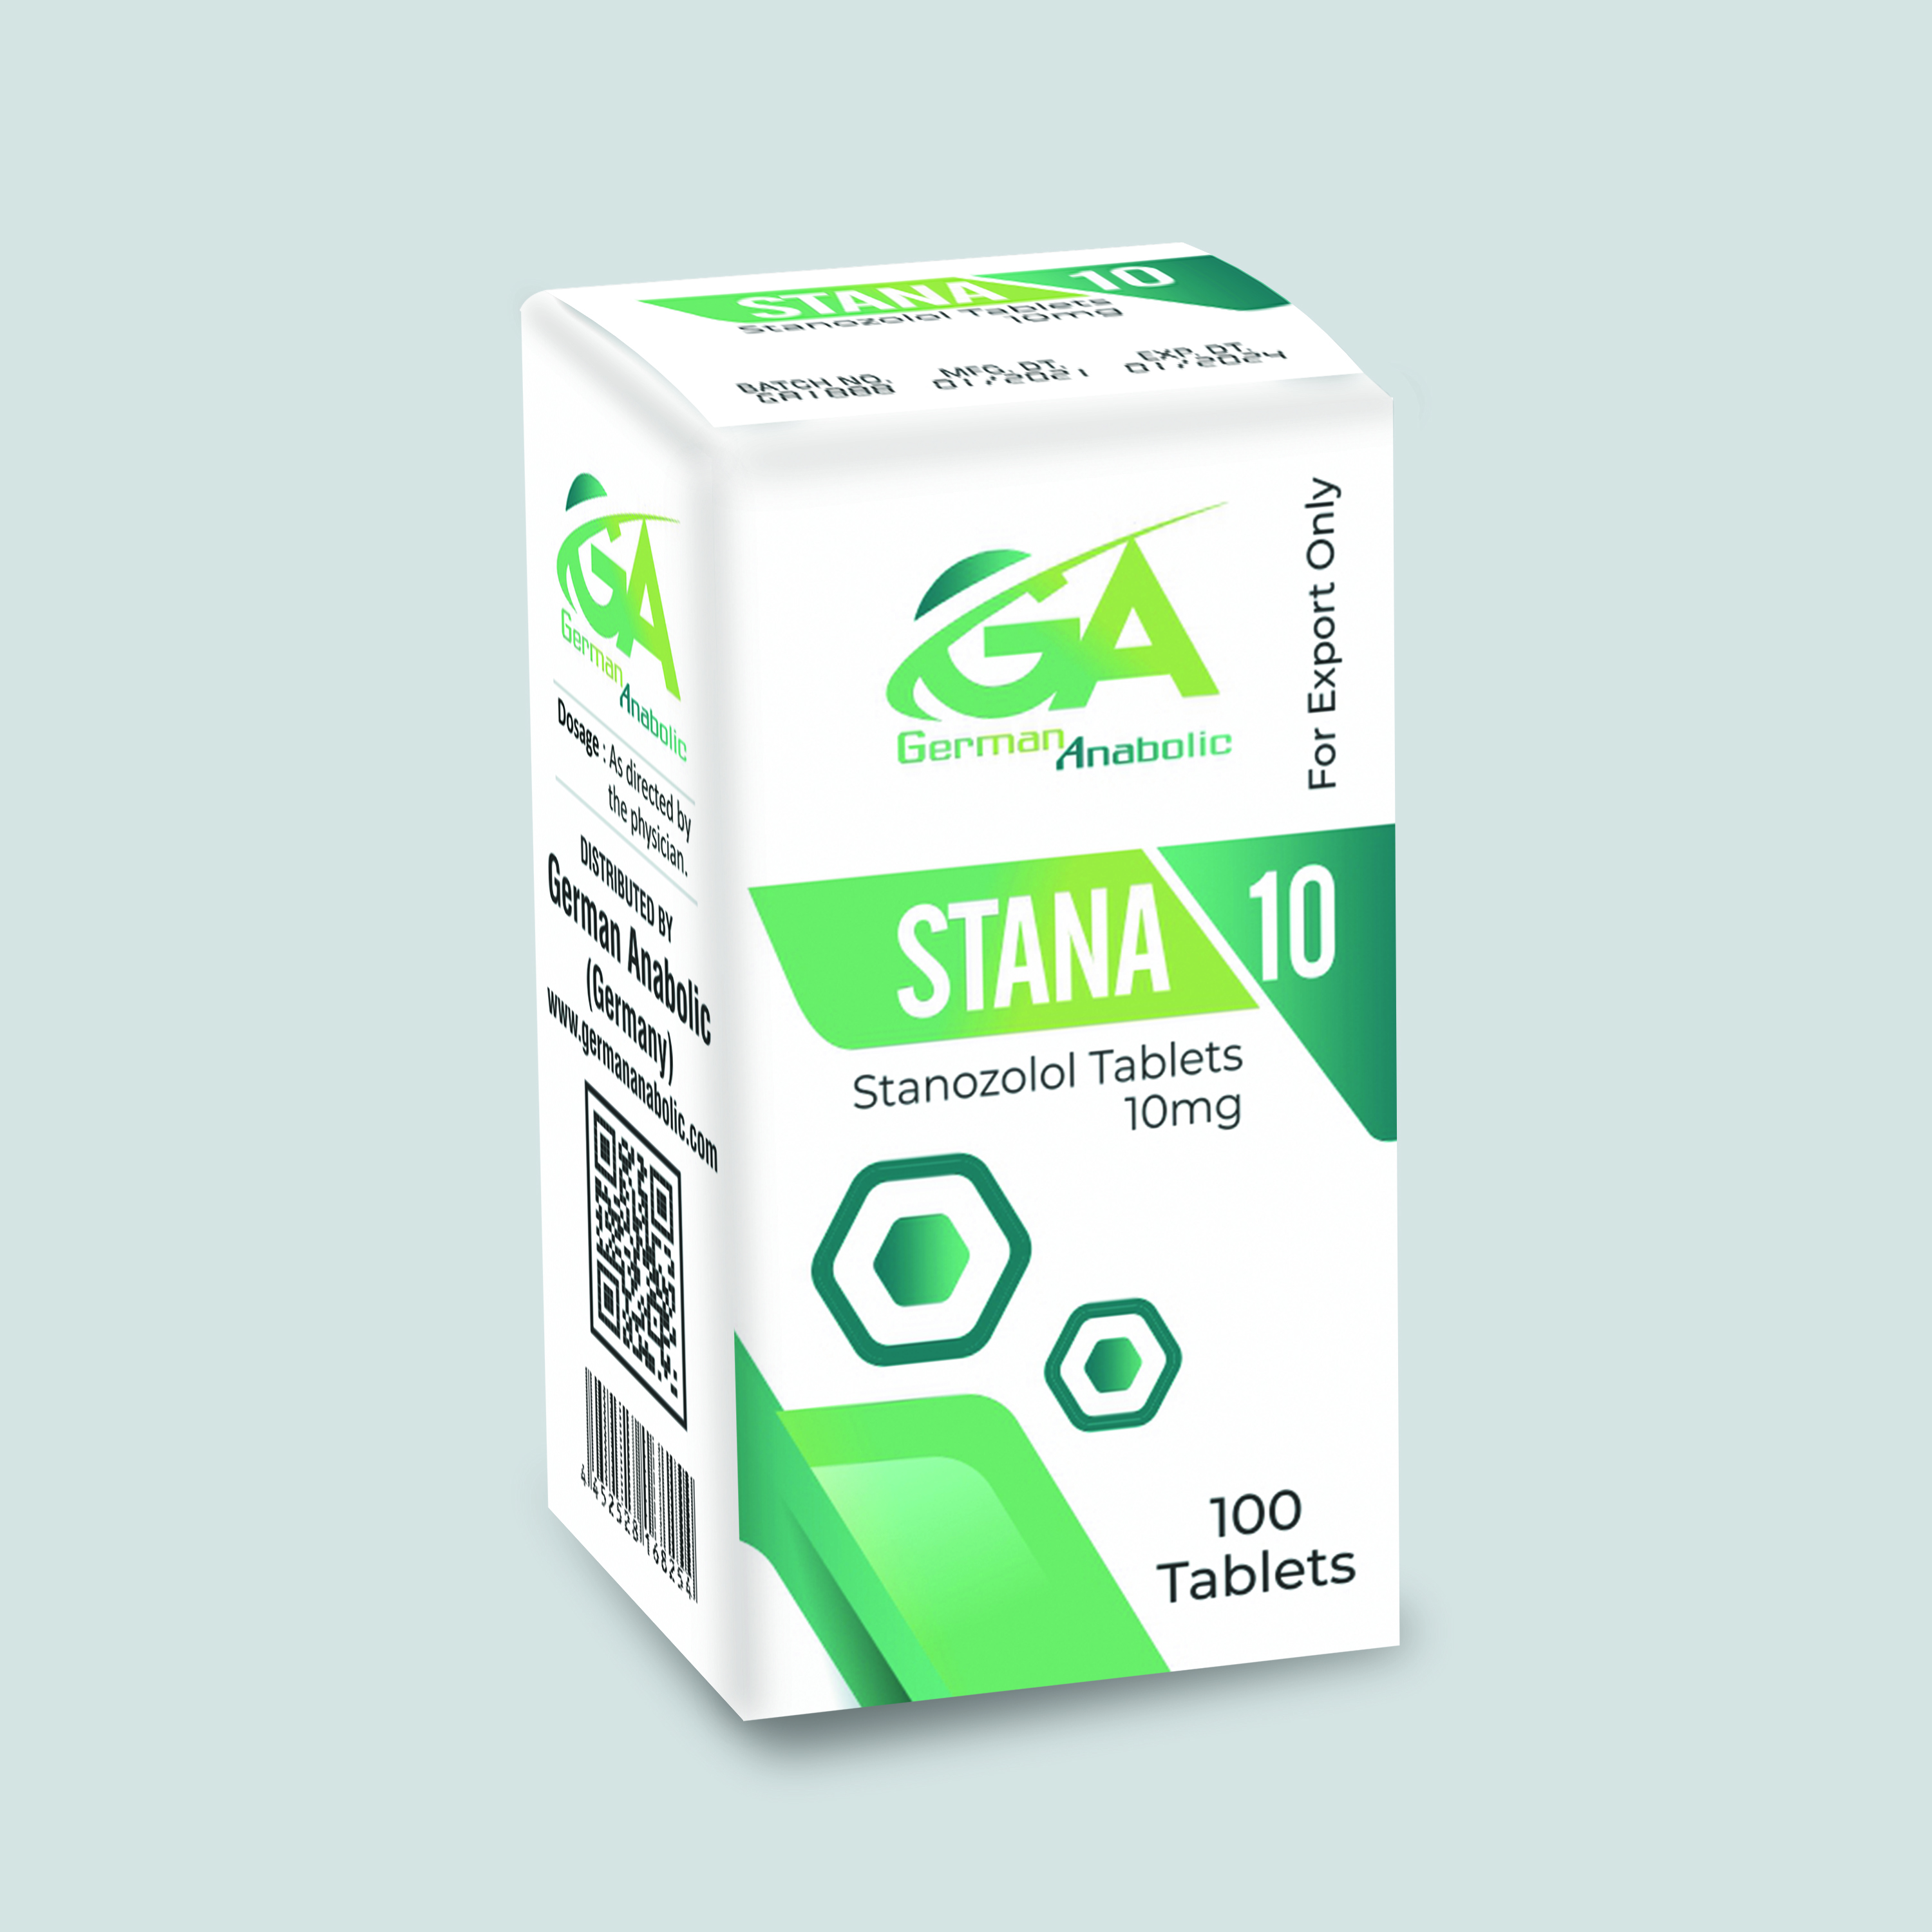 Stana 10 (stanozolol tablets 10mg )